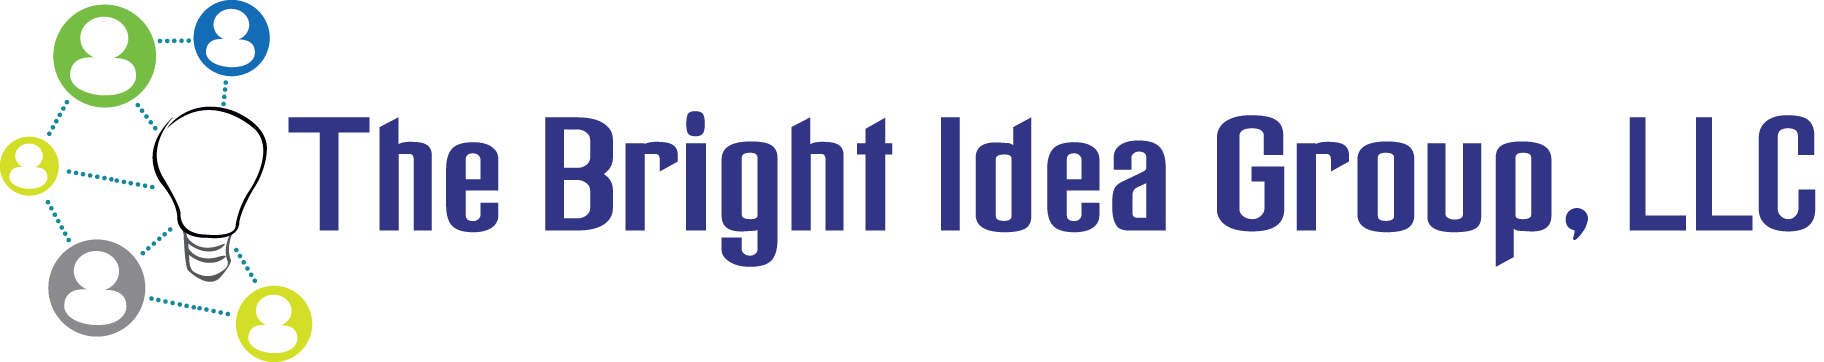 The Bright Idea Group